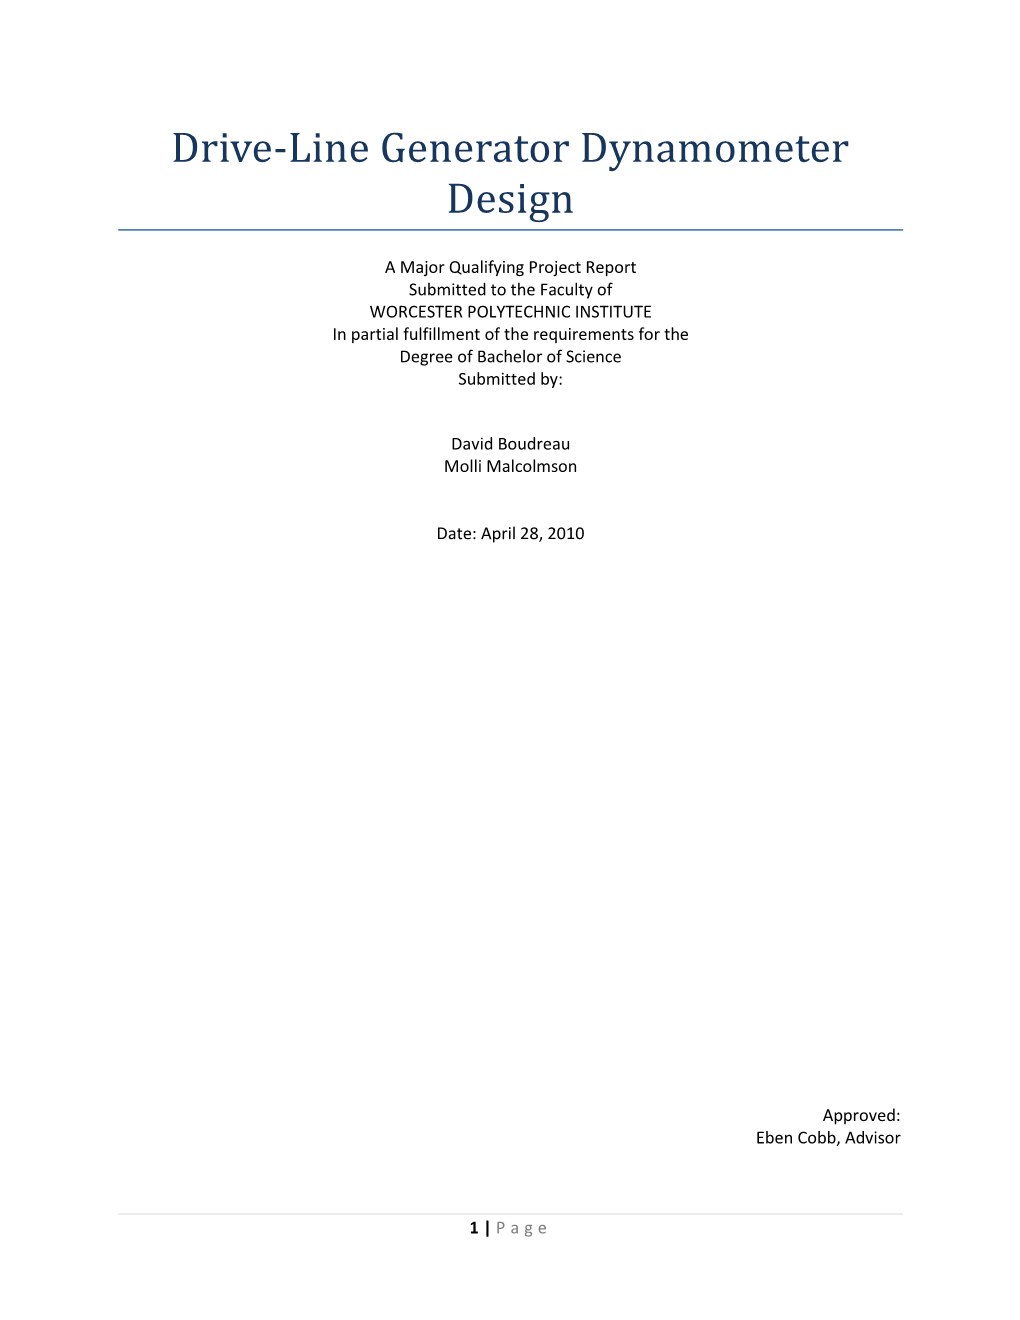 Drive-Line Generator Dynamometer Design